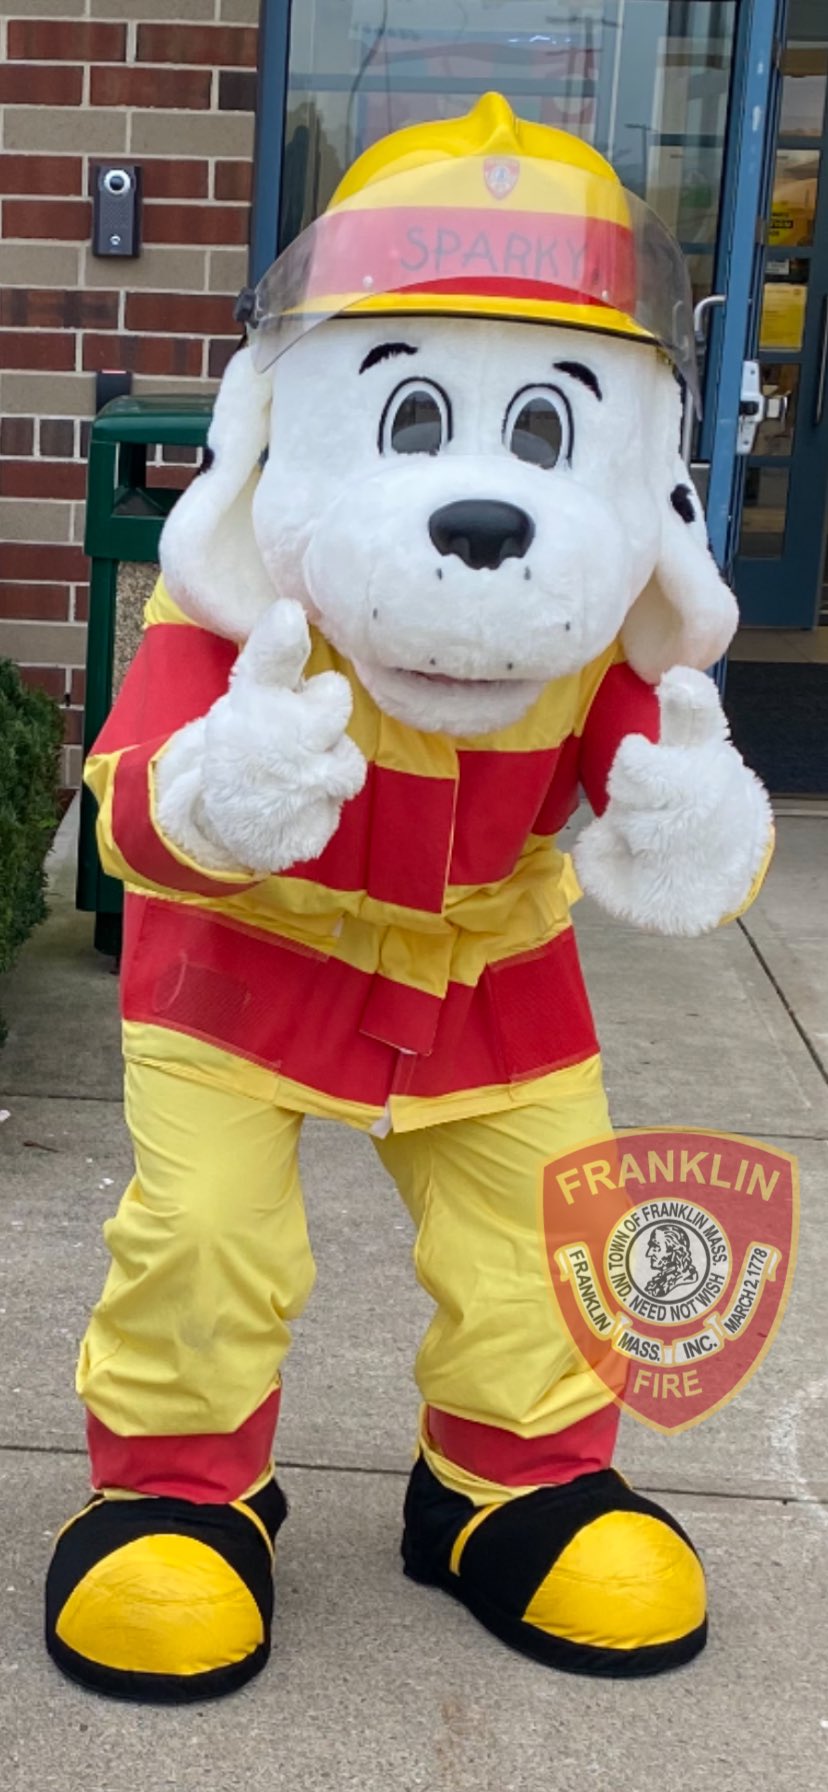 Franklin Fire SAFE Program reminds us that October is fire safety month